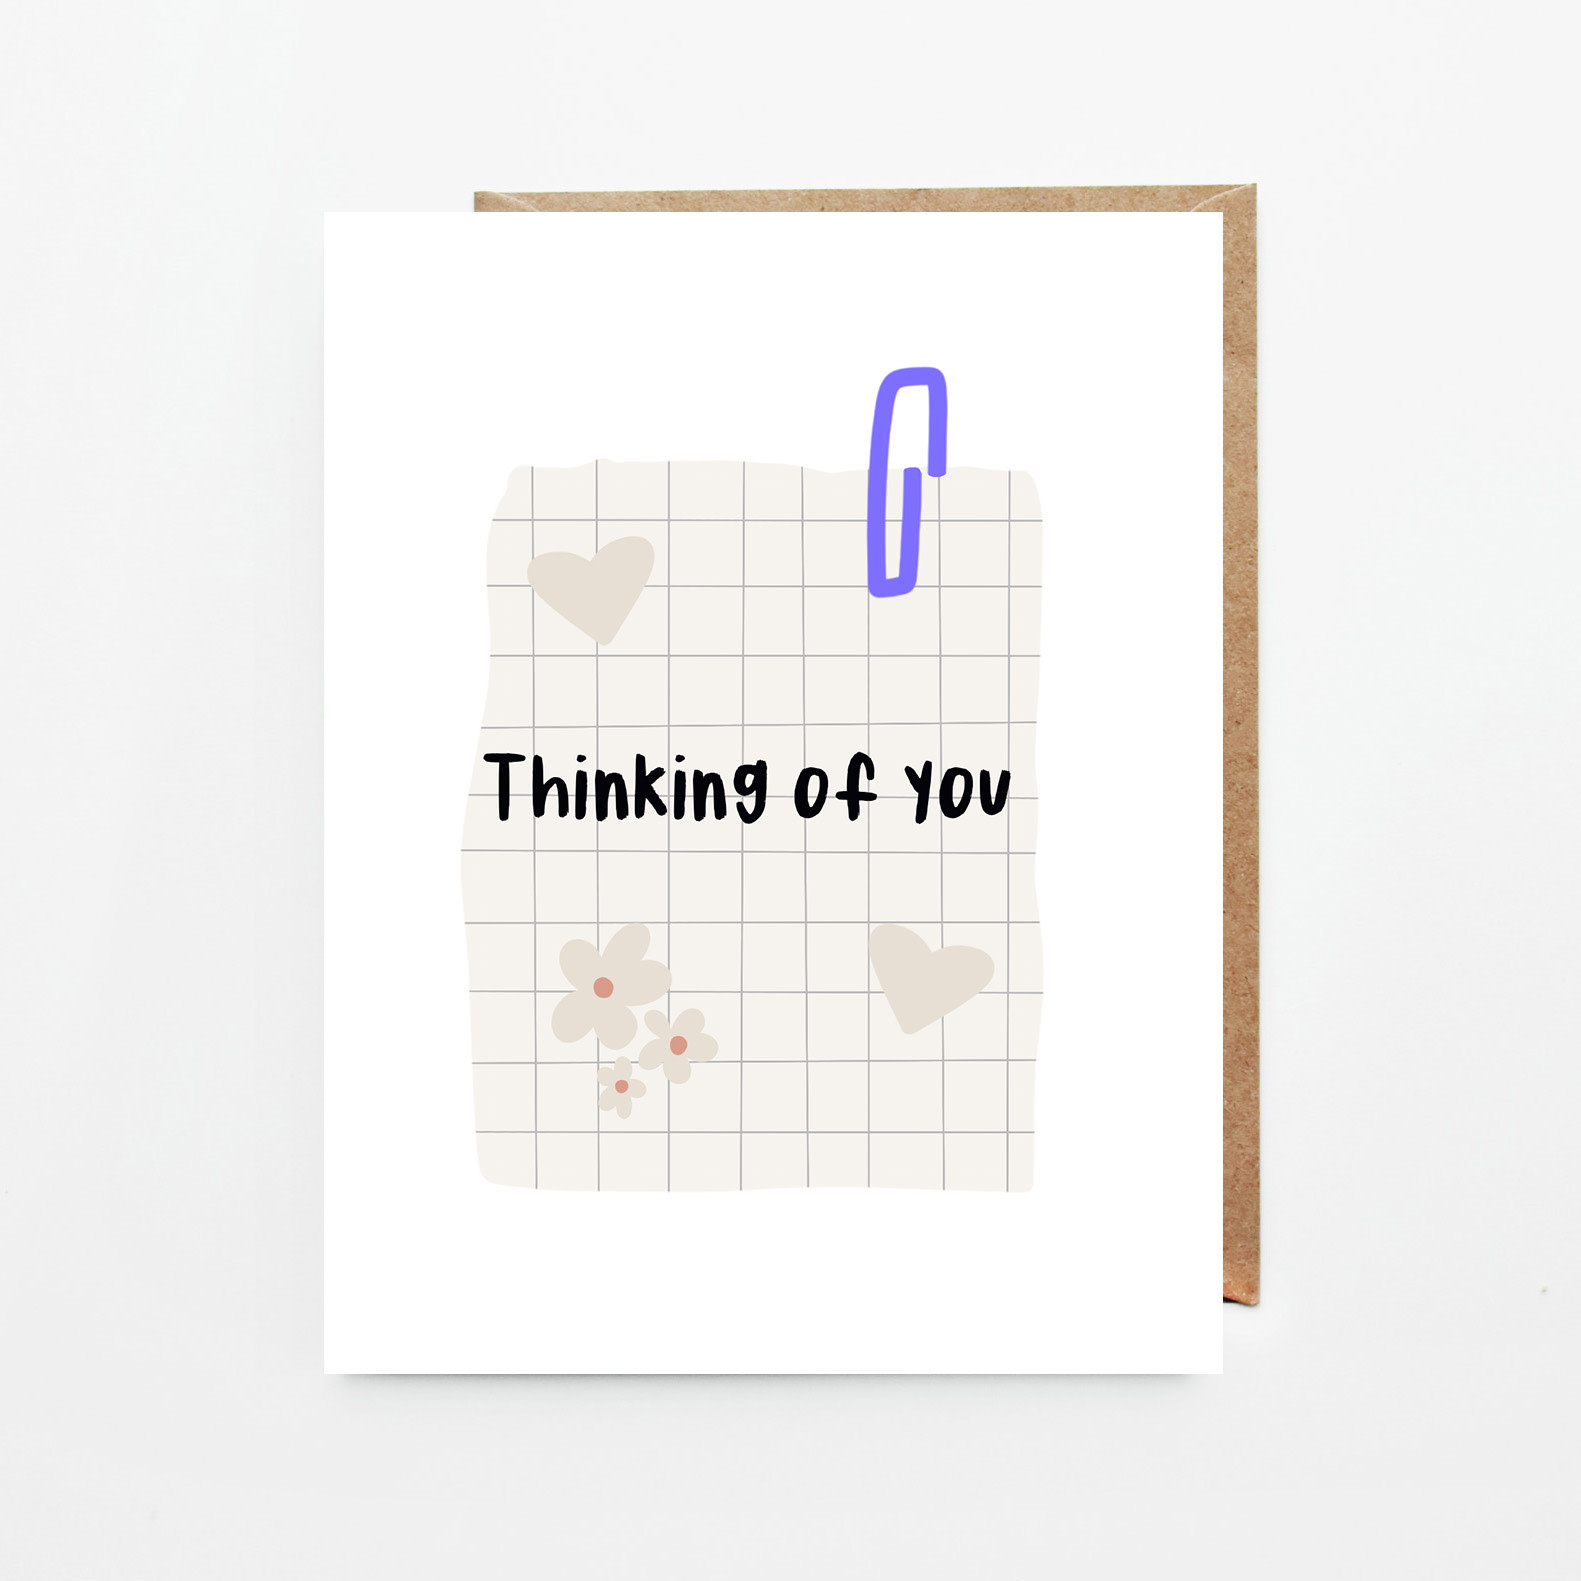 Glenda Cast Greeting Card - Thinking of you